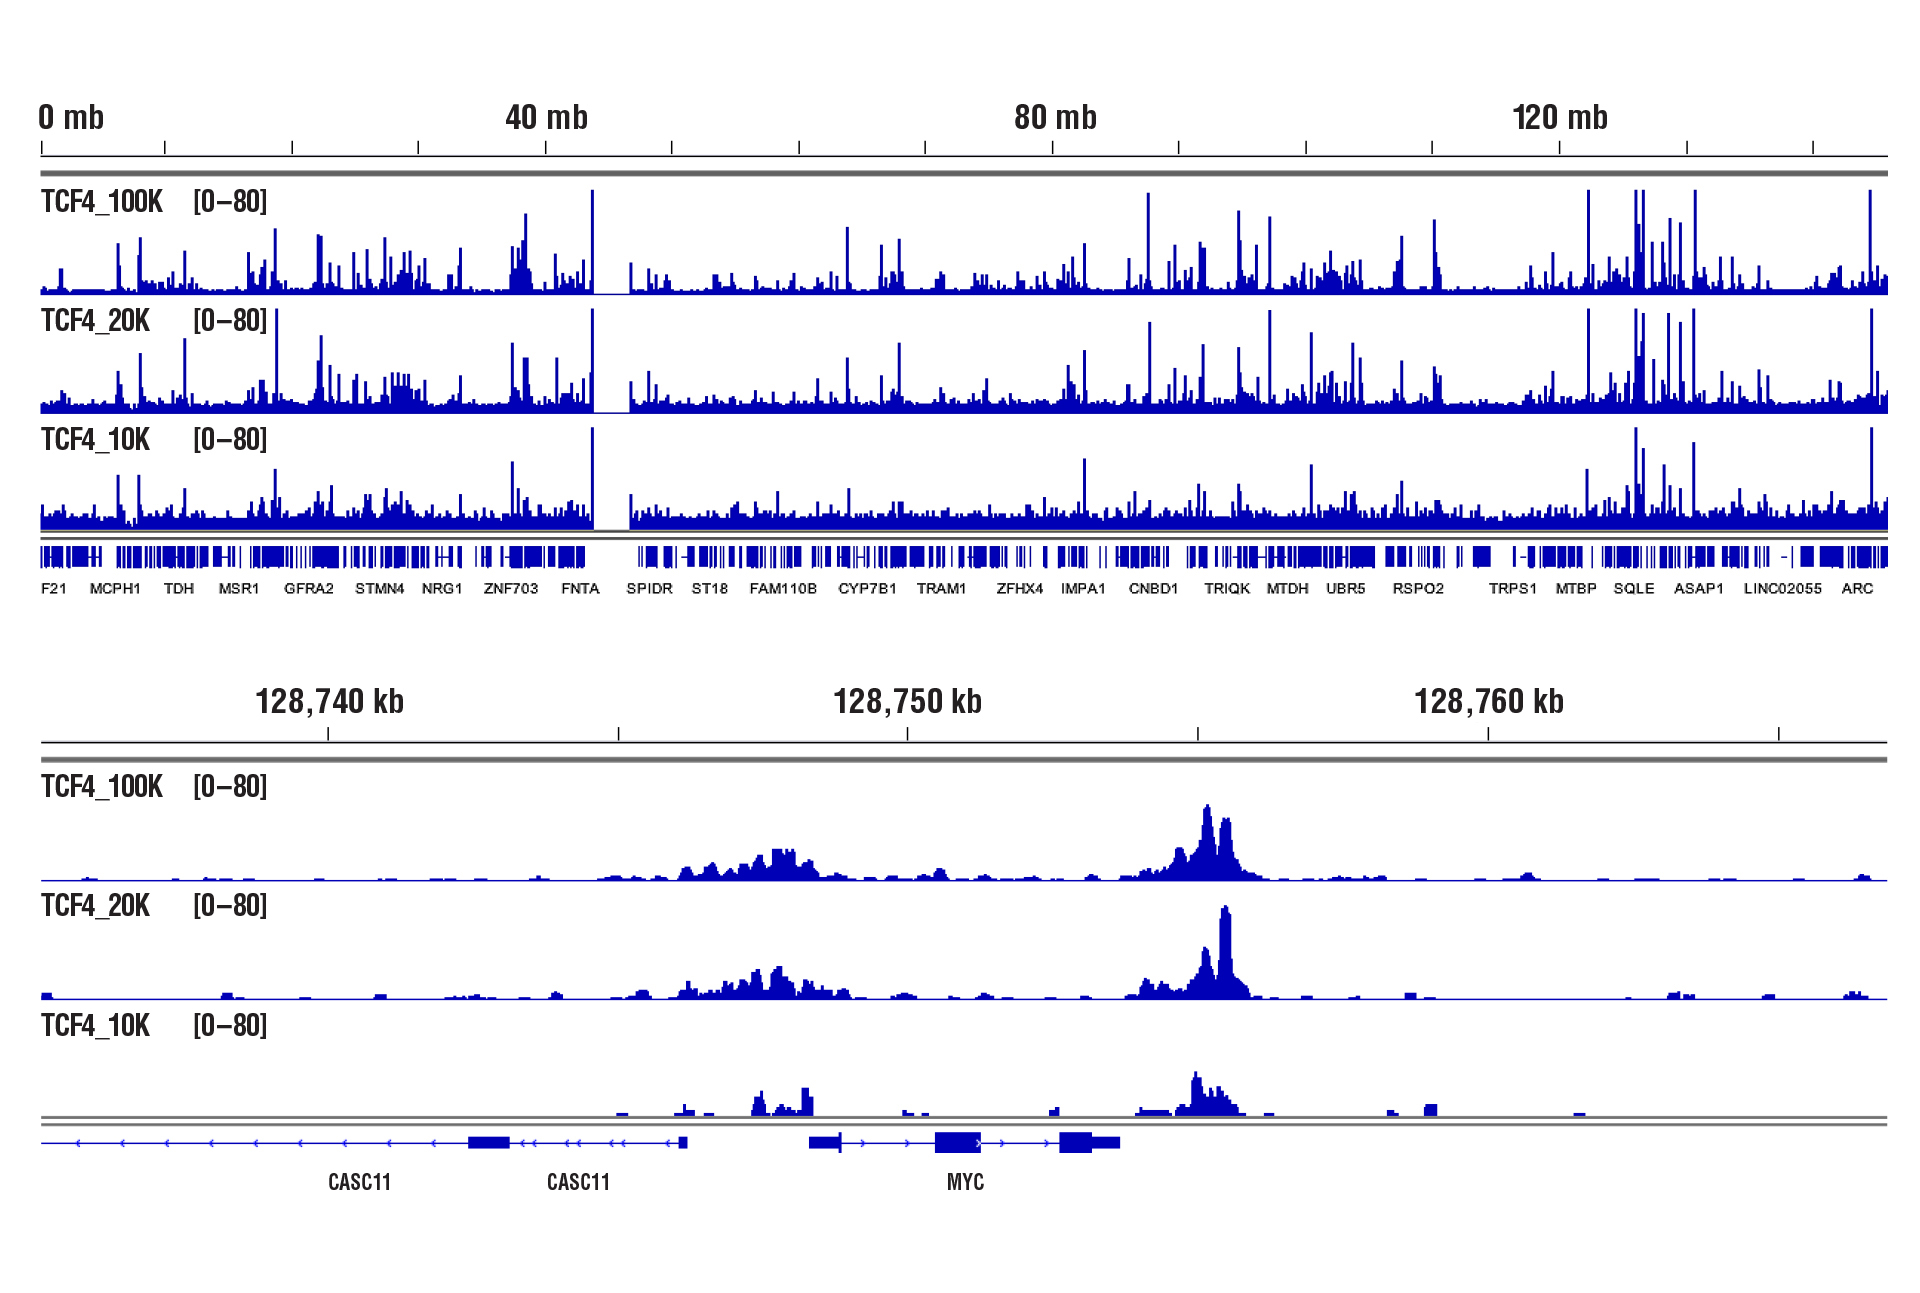 TCF4 NGS data for 100K, 20K & 10K cells